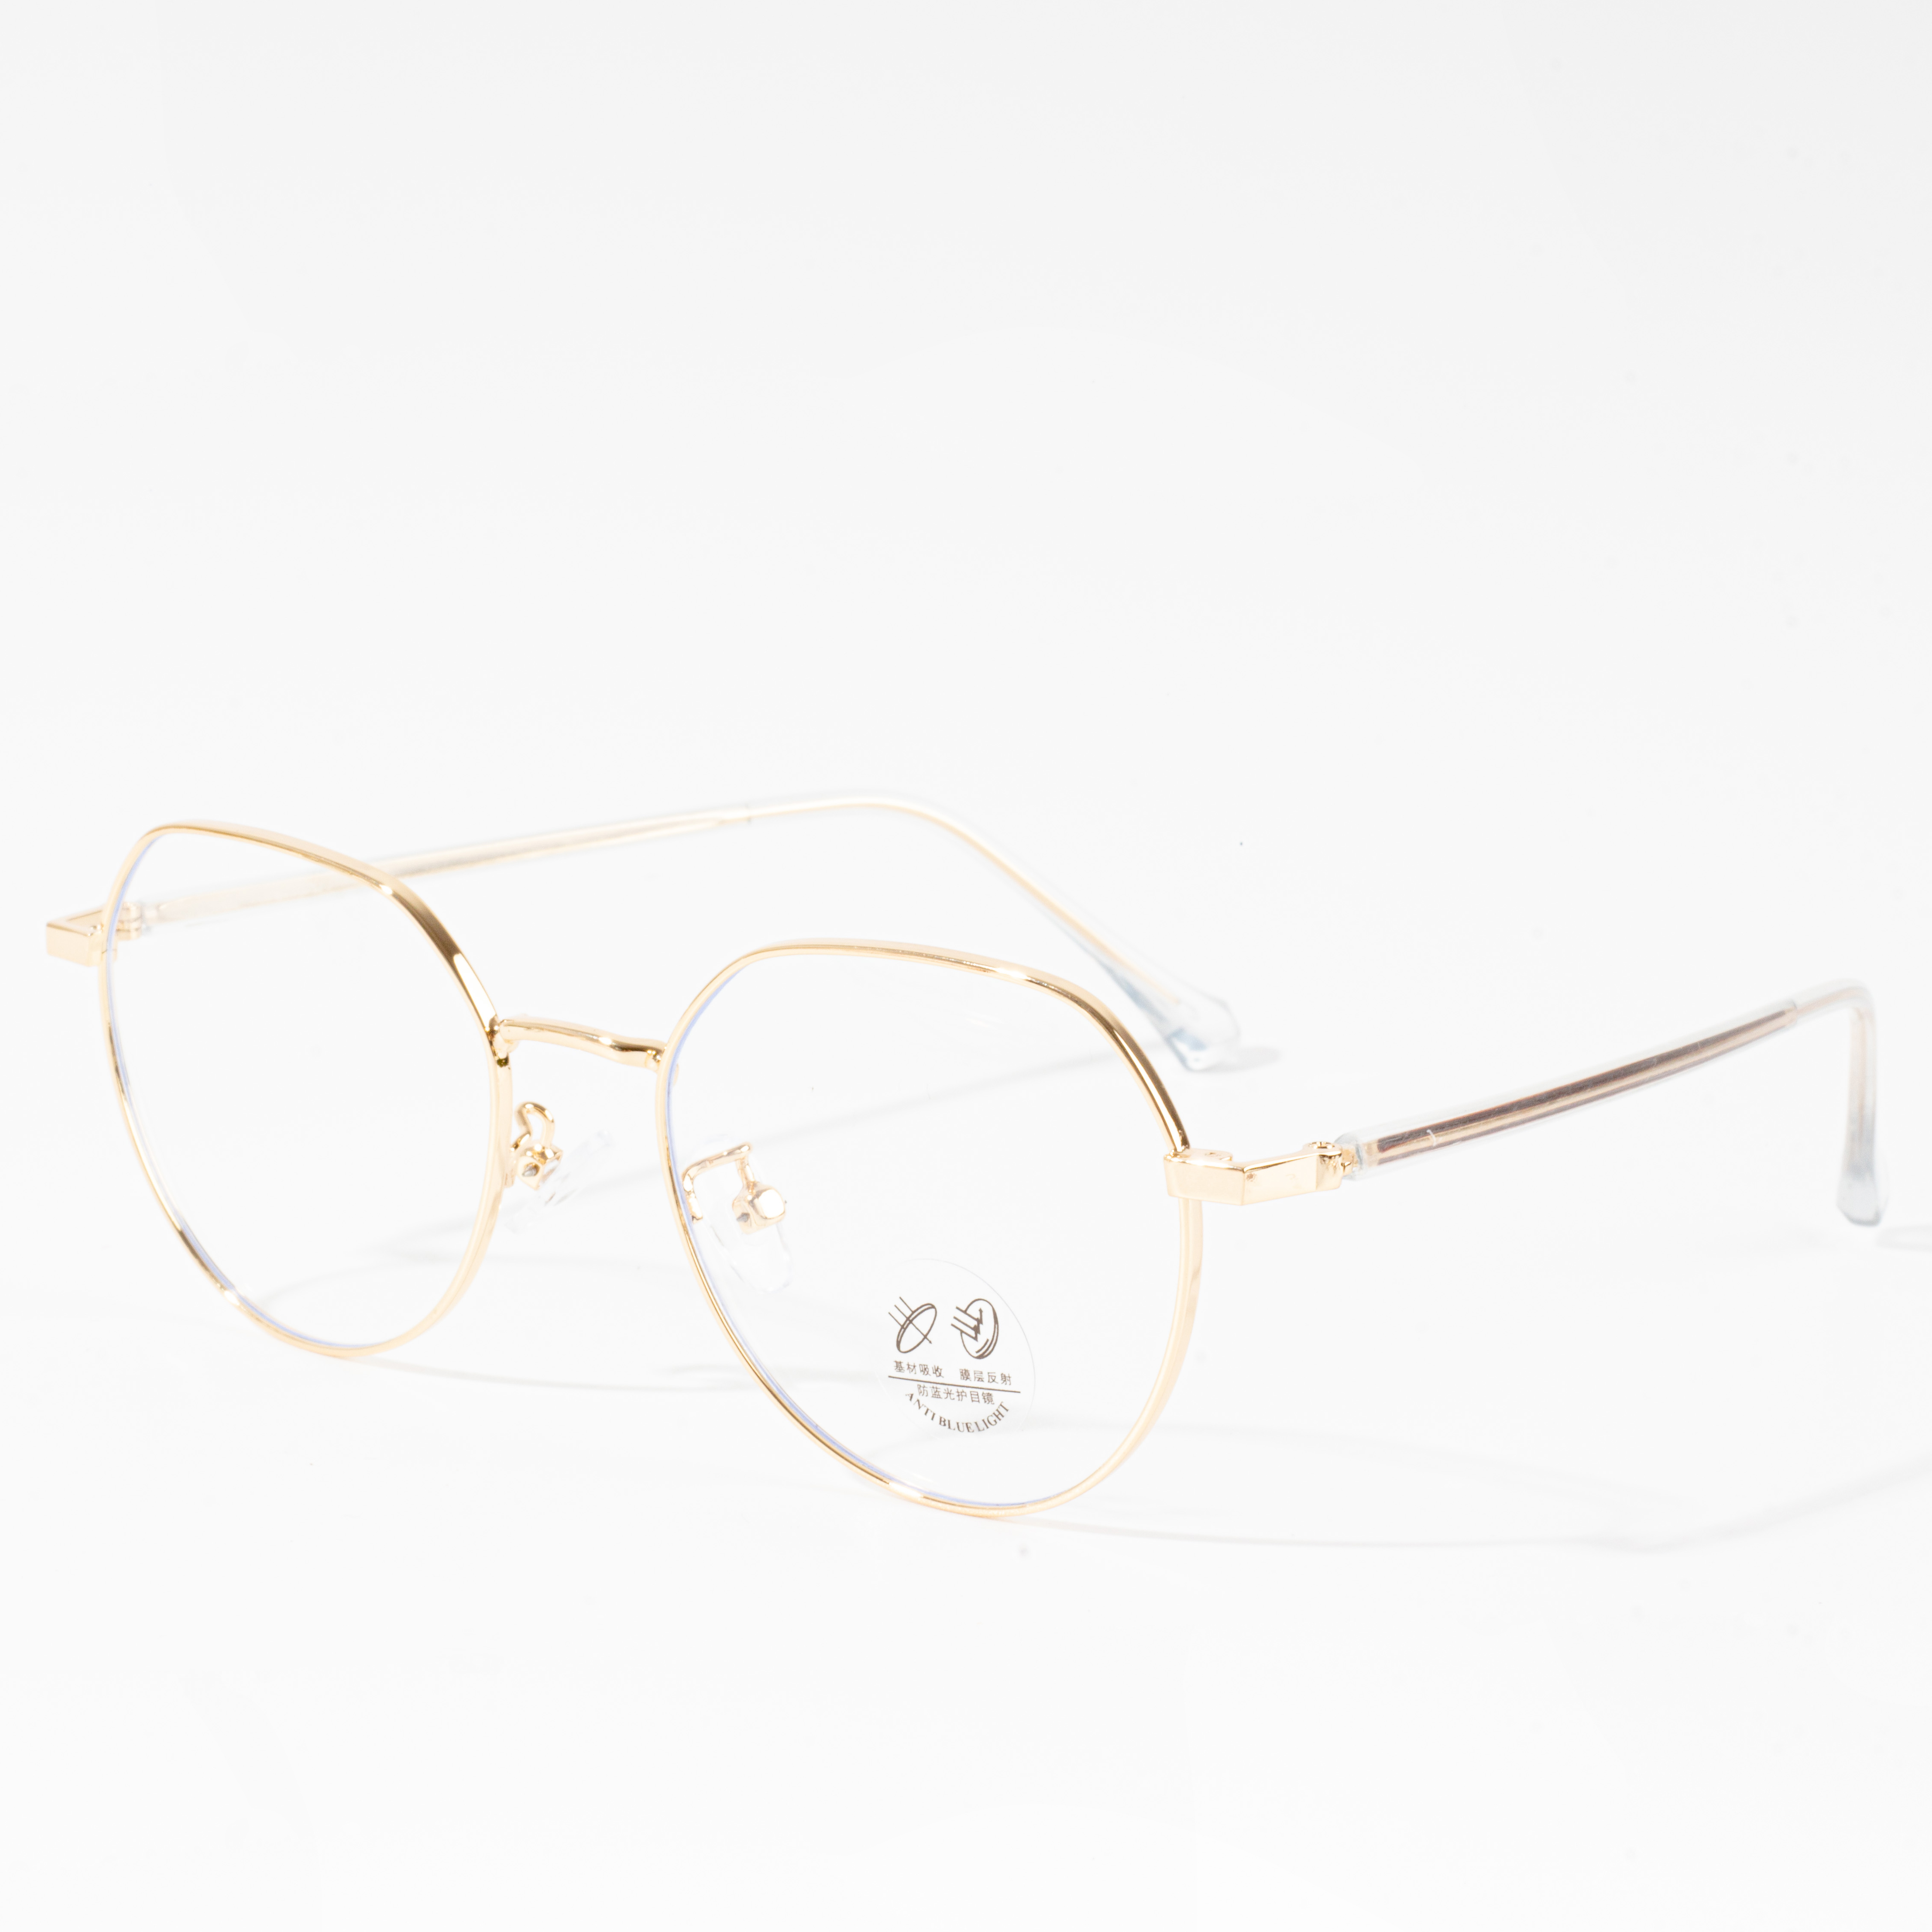 Designer-Brillengestelle aus Metall